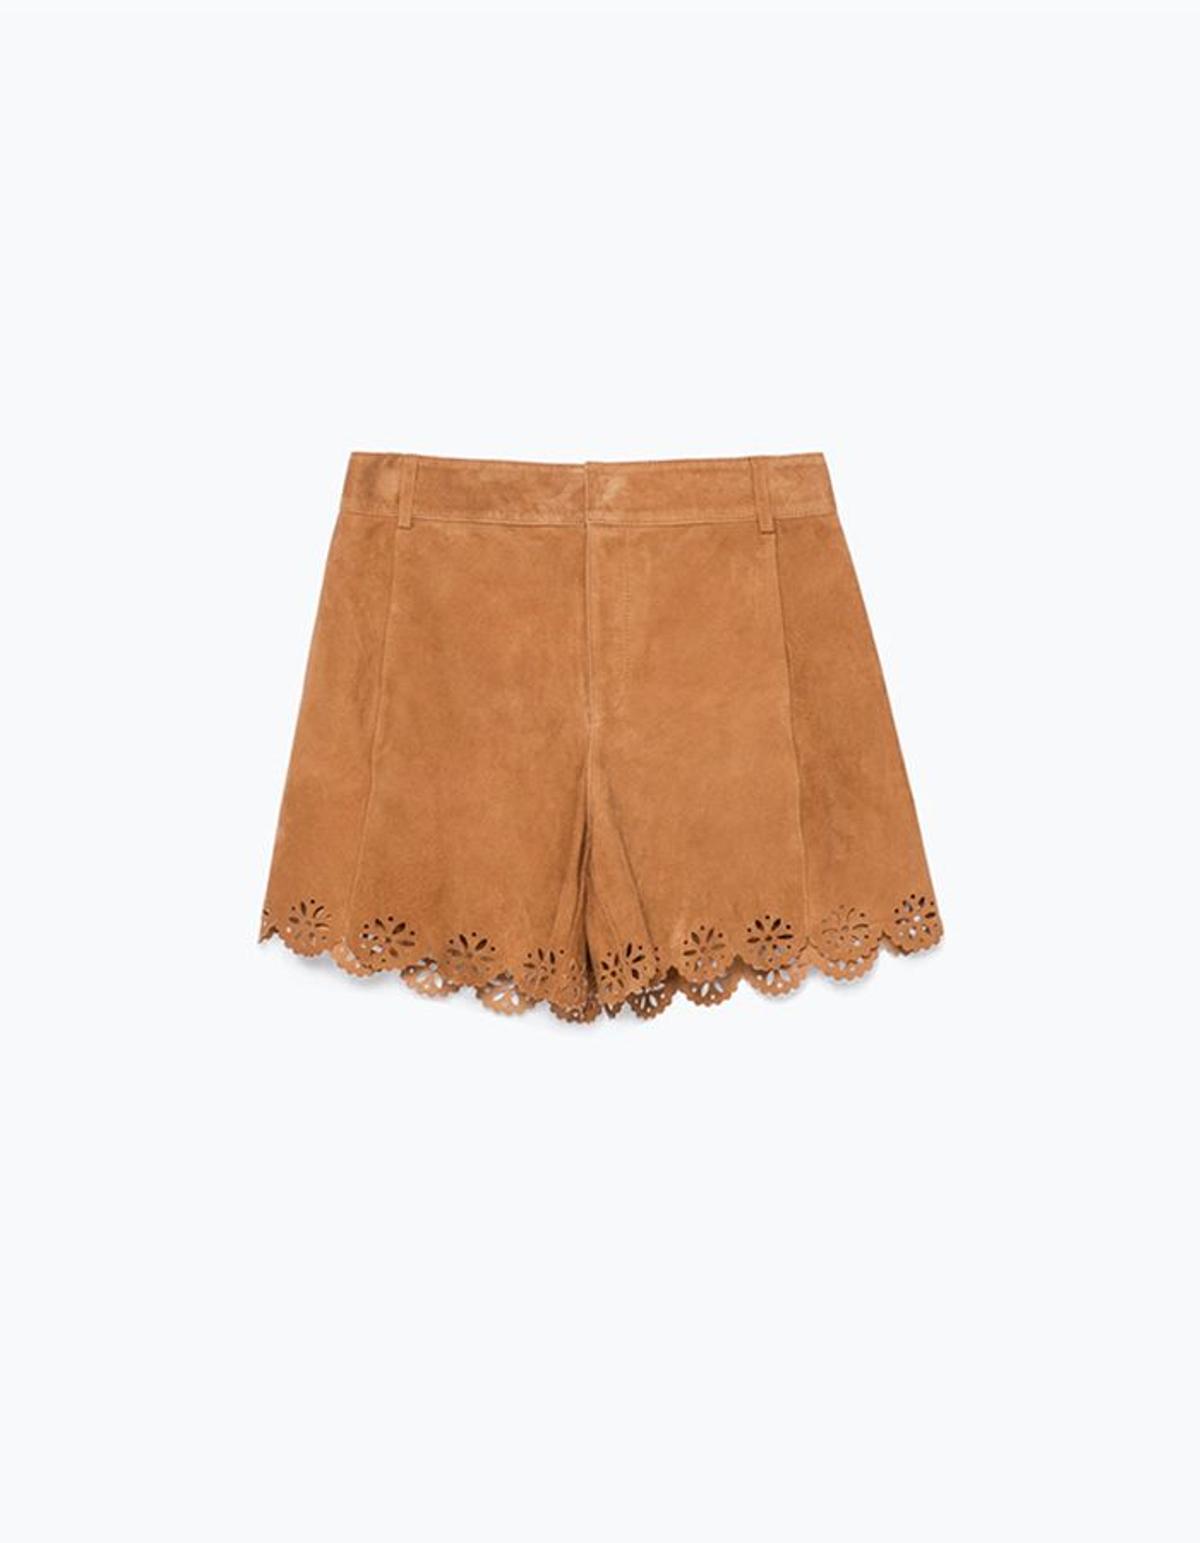 Shorts de ante troquelados de Zara (59,95€)